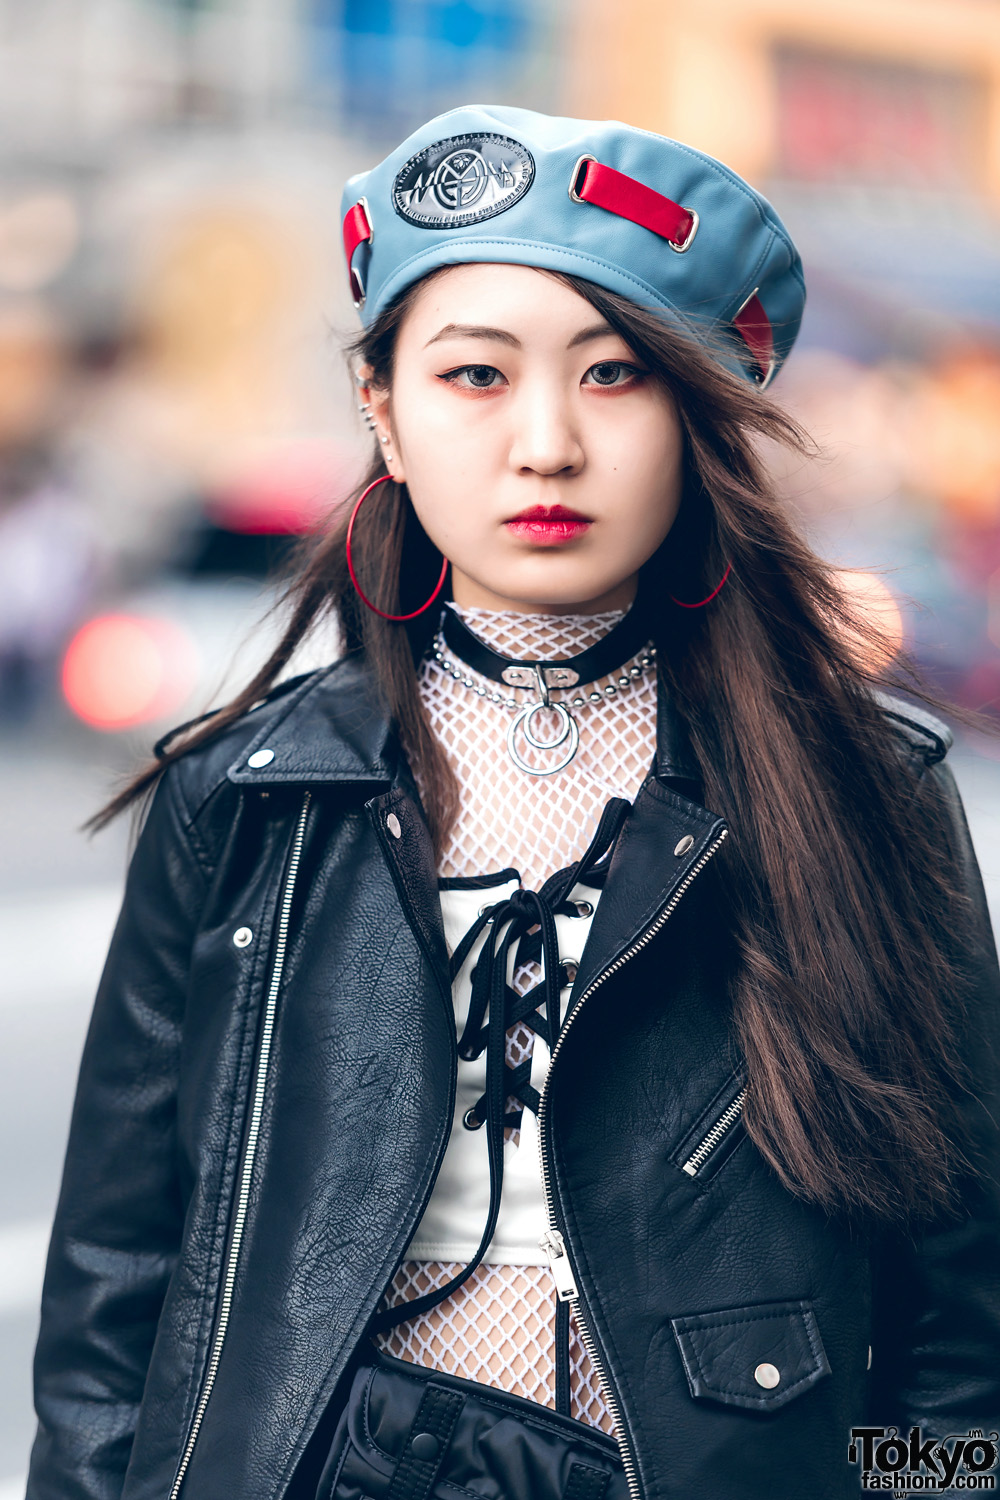 Harajuku Teen Girl Squad in Modern Japanese Streetwear